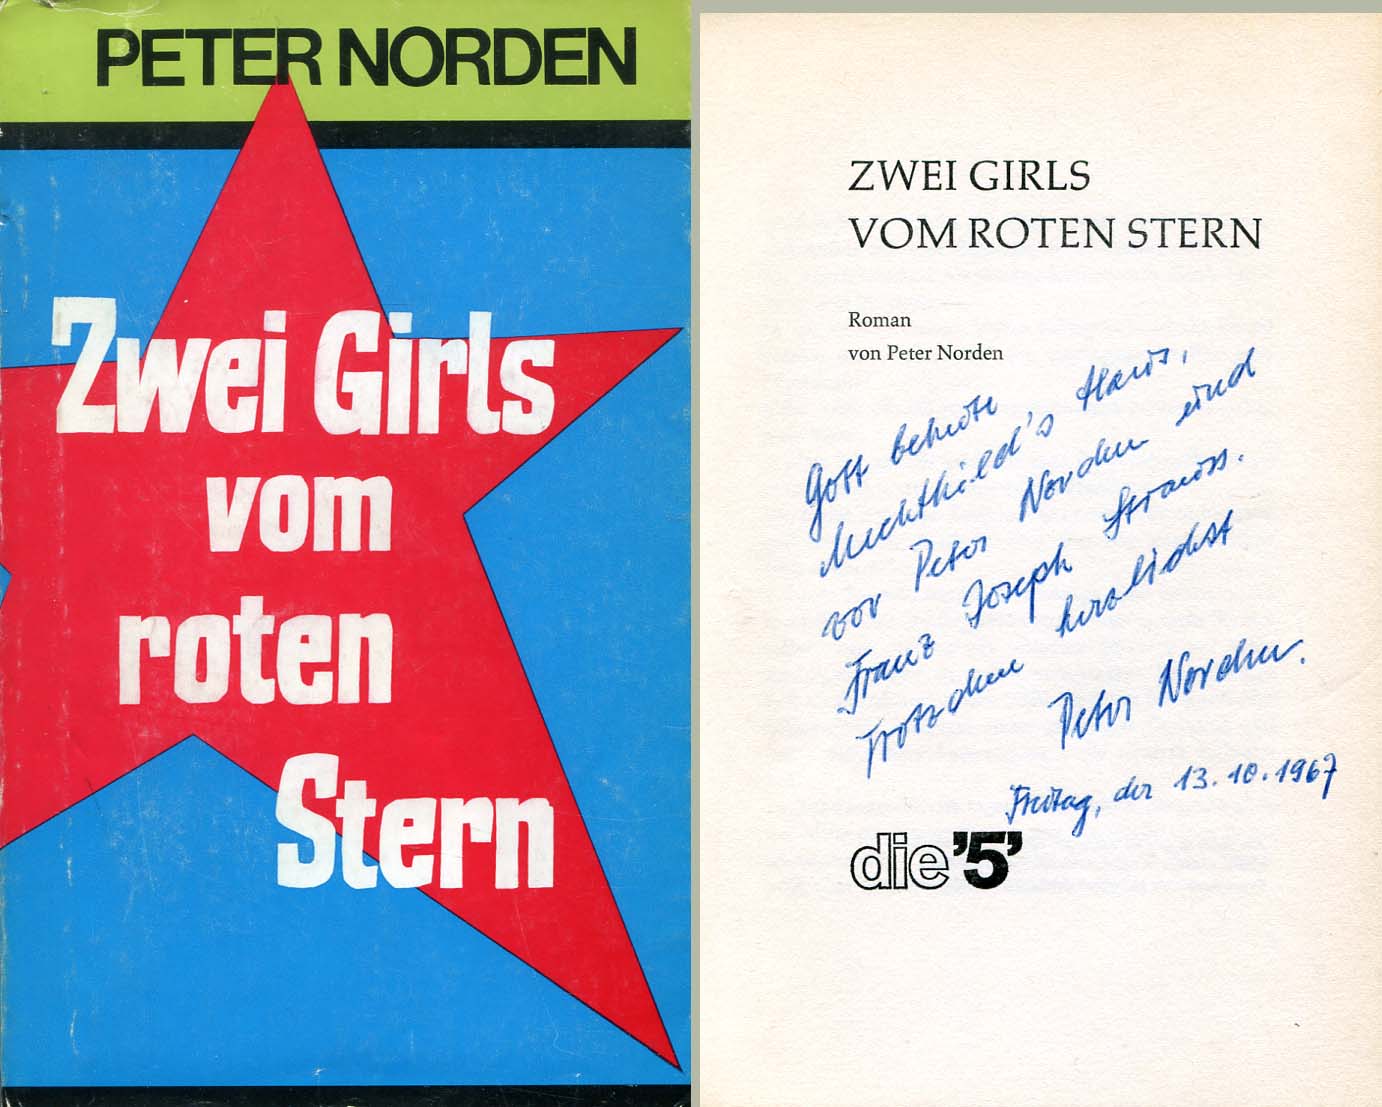 Norden, Peter autograph